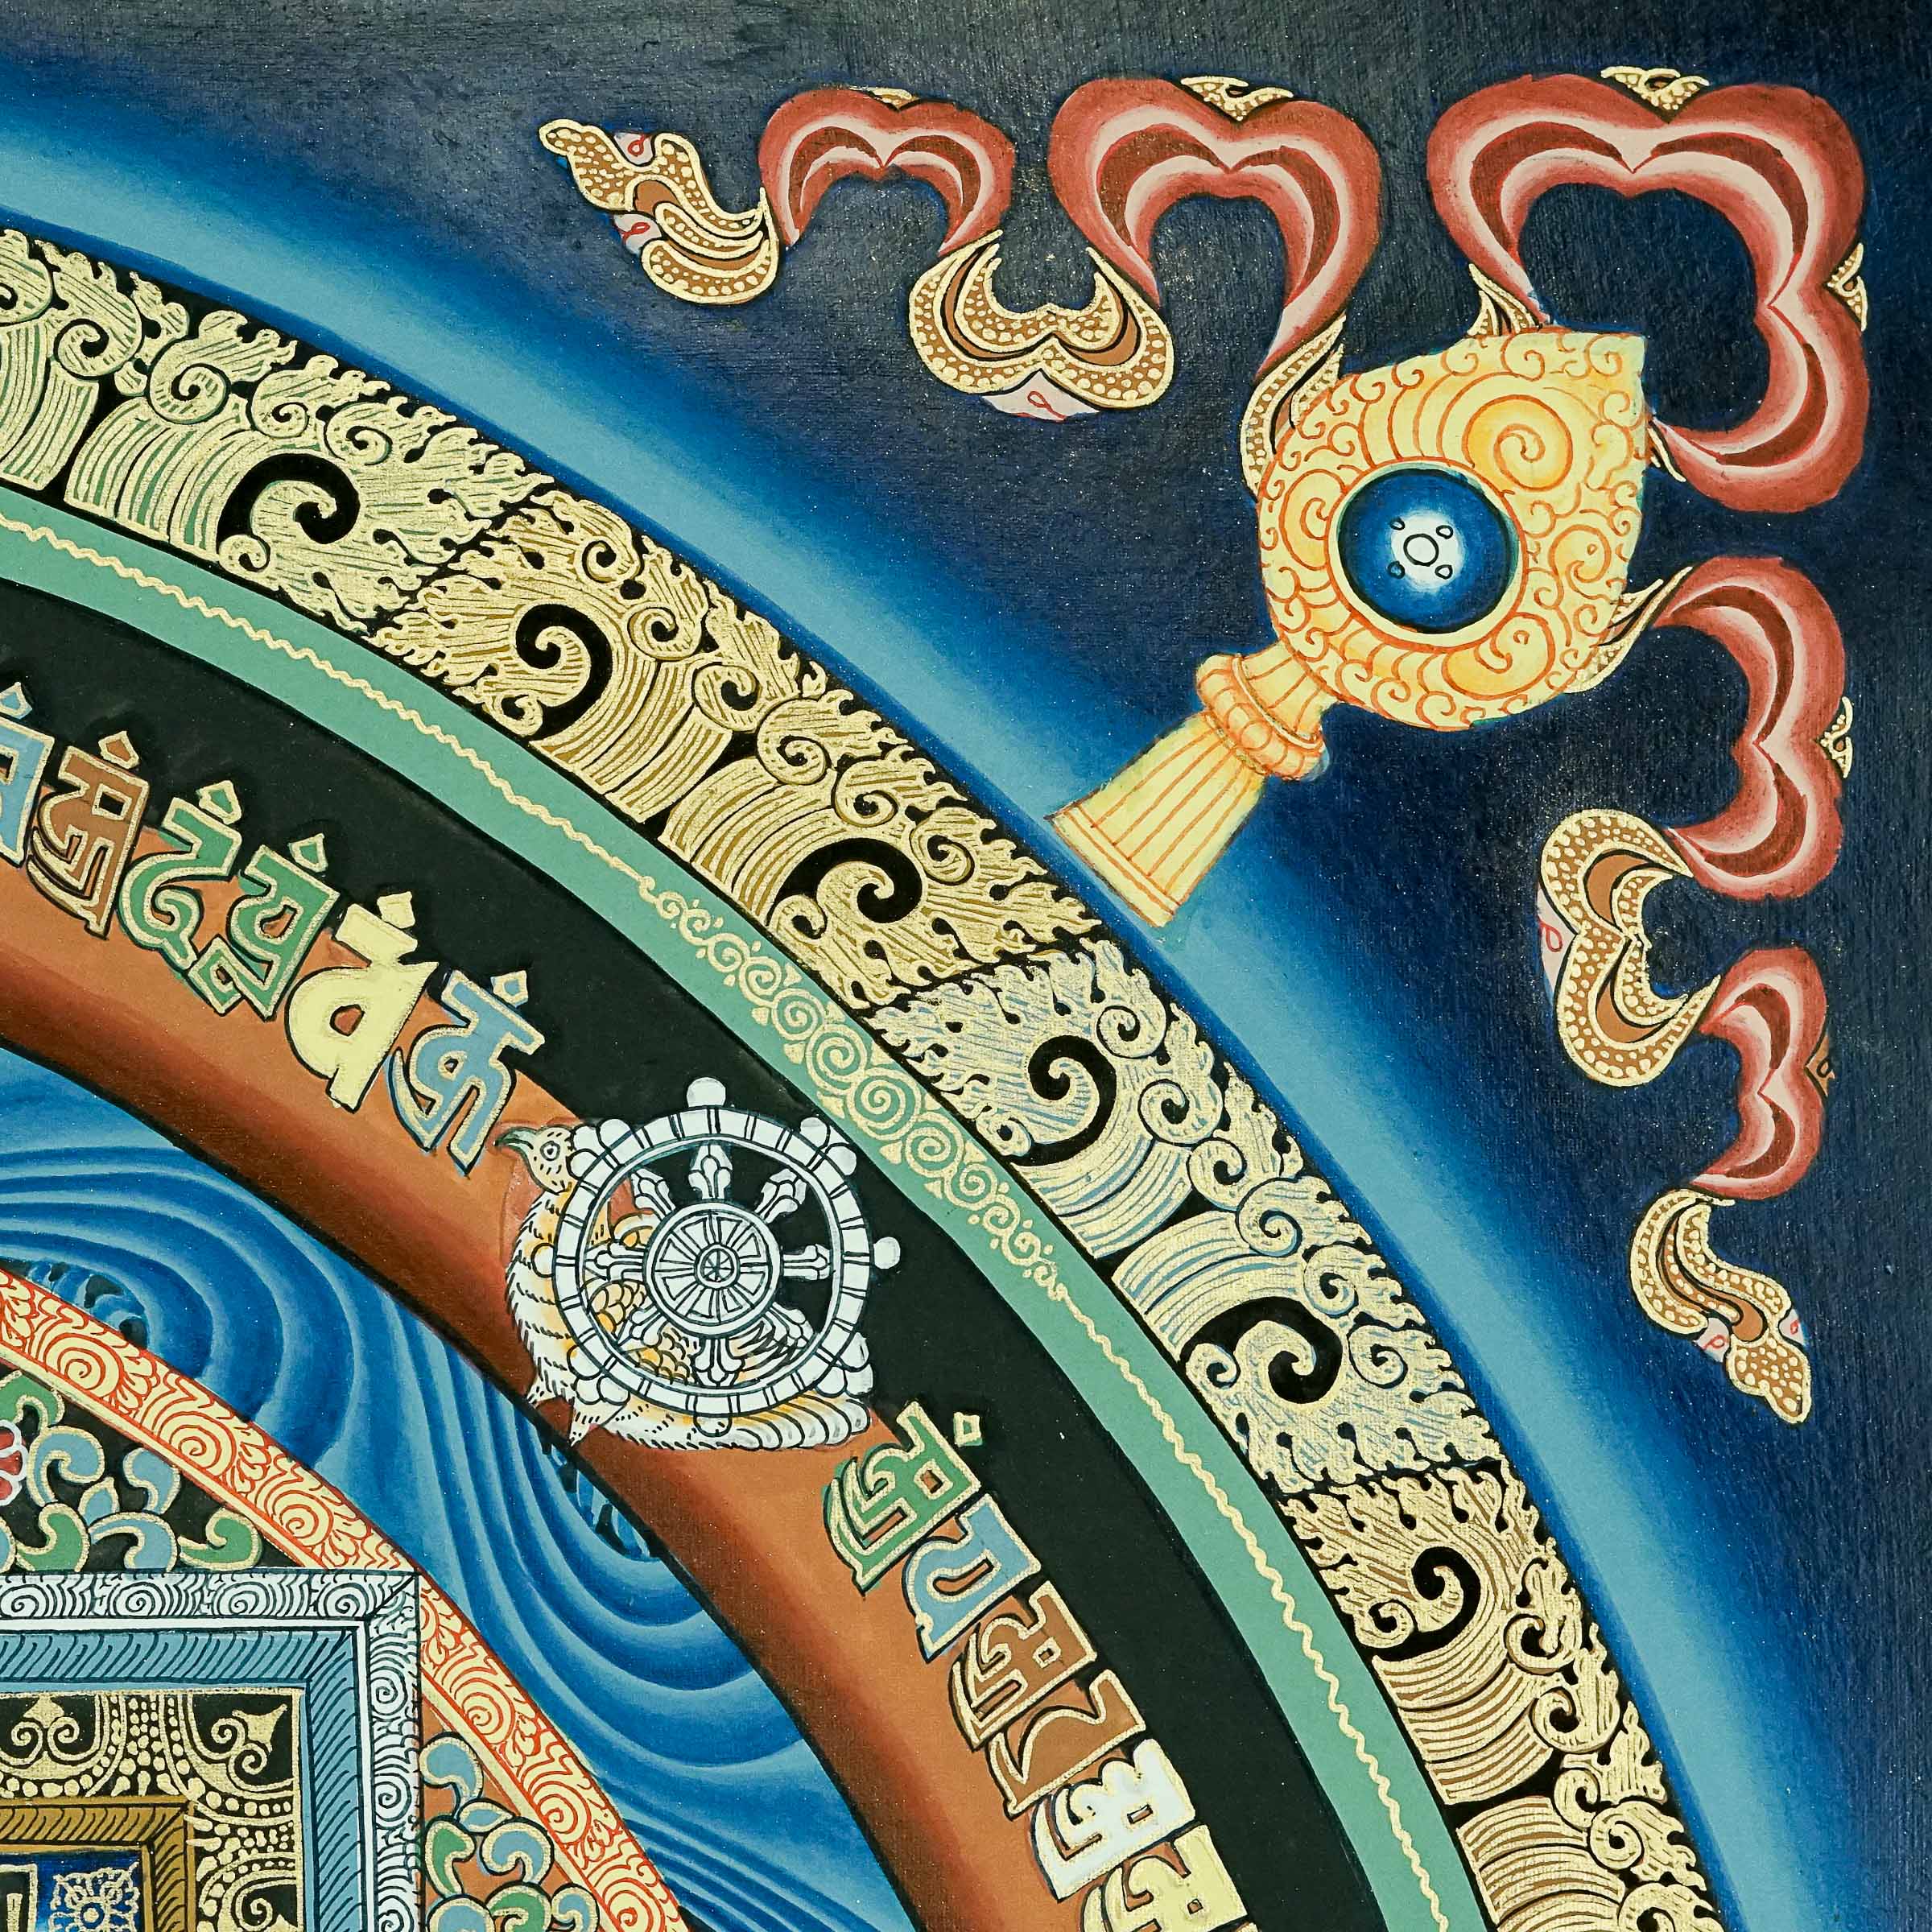 Kalchakra Mandala Thangka Handmade Painting